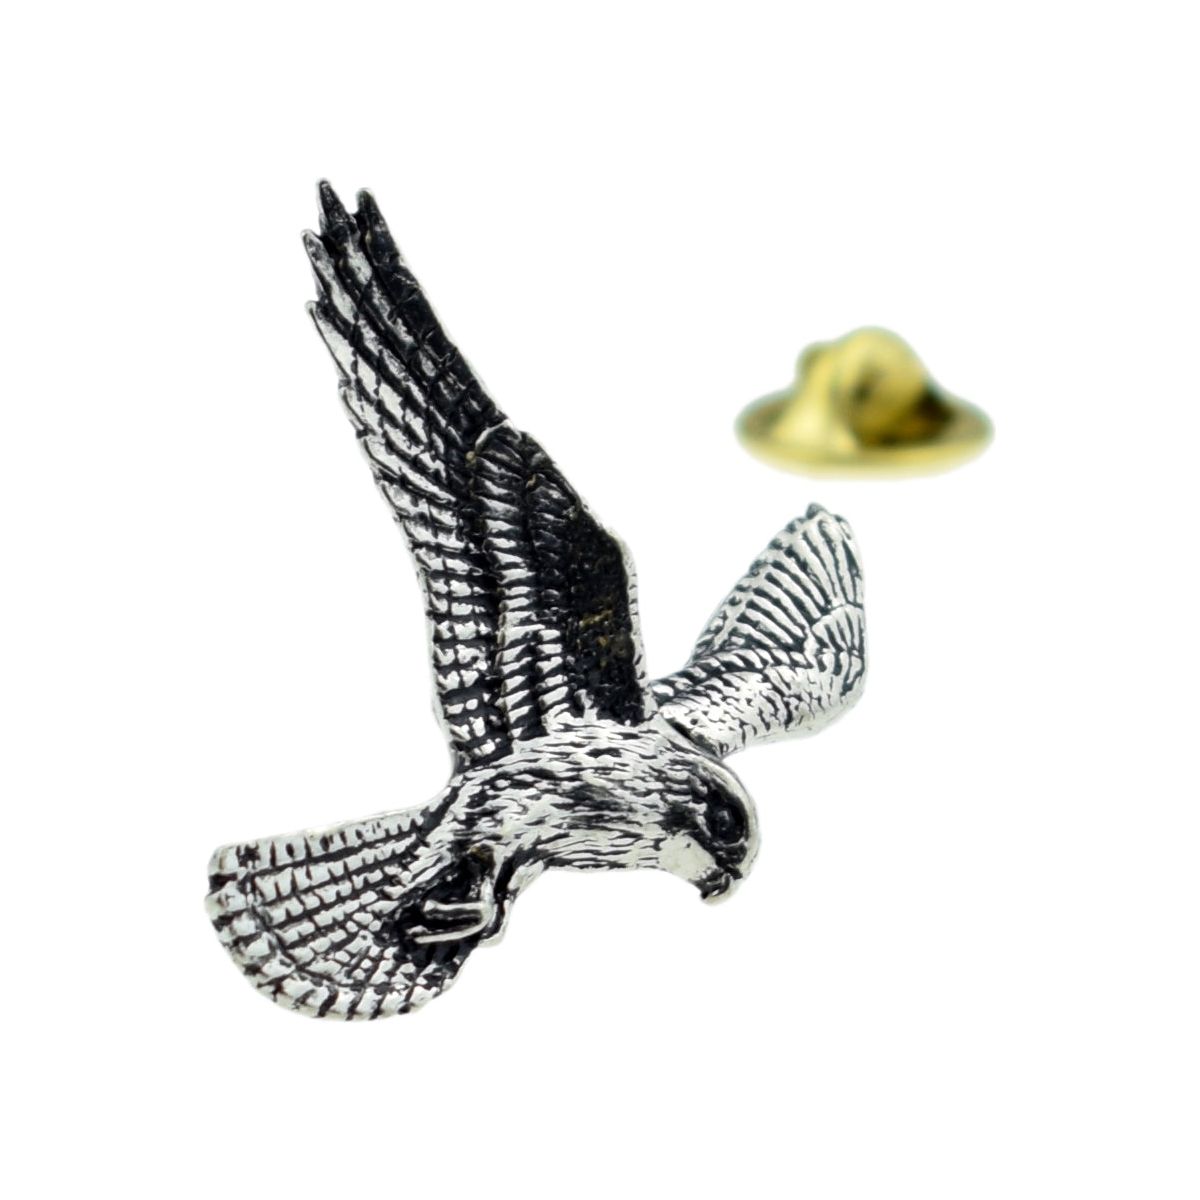 Kestrel Bird English Pewter Lapel Pin Badge - Ashton and Finch